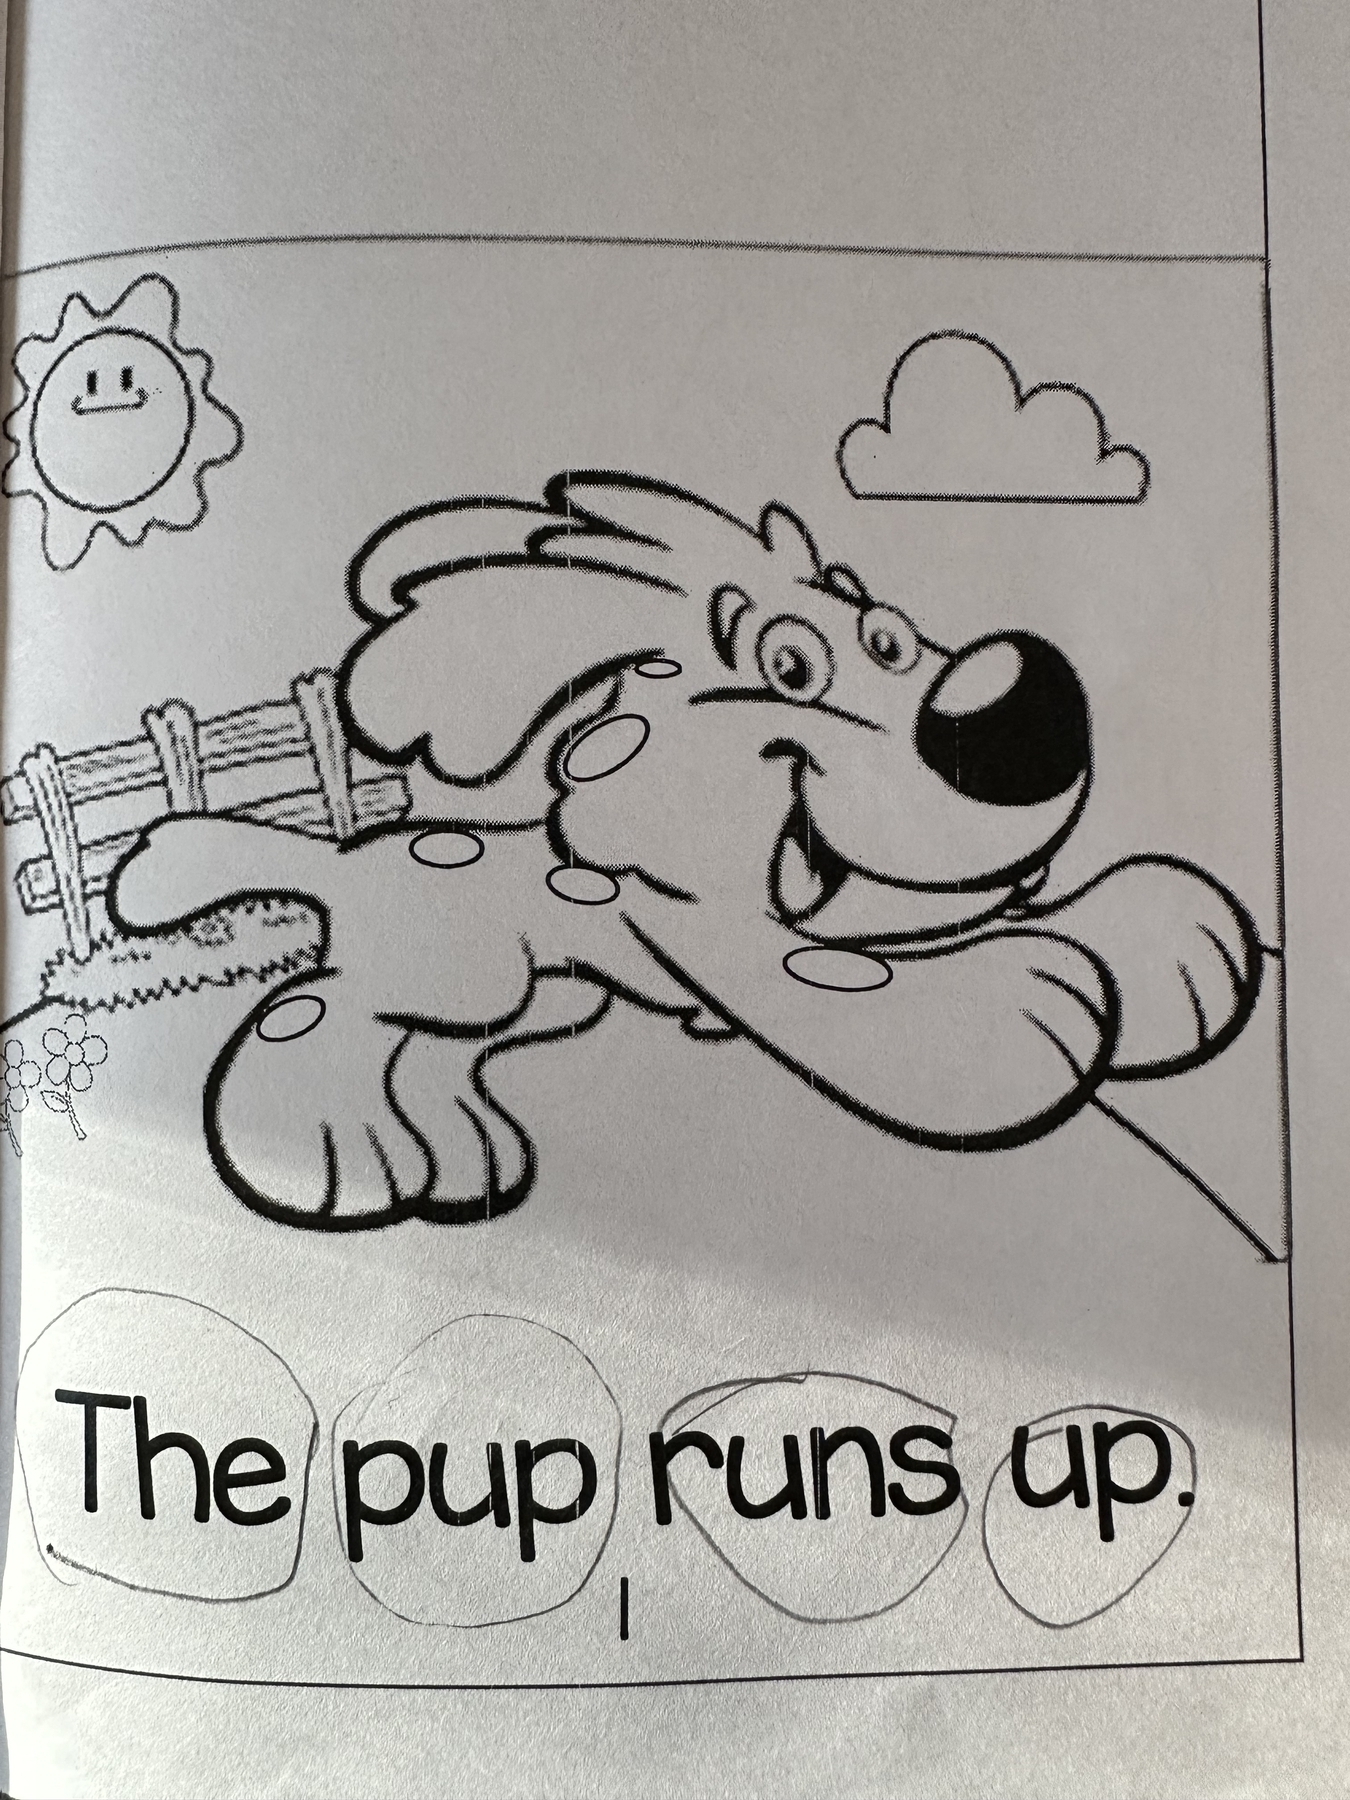 The pup runs page 1